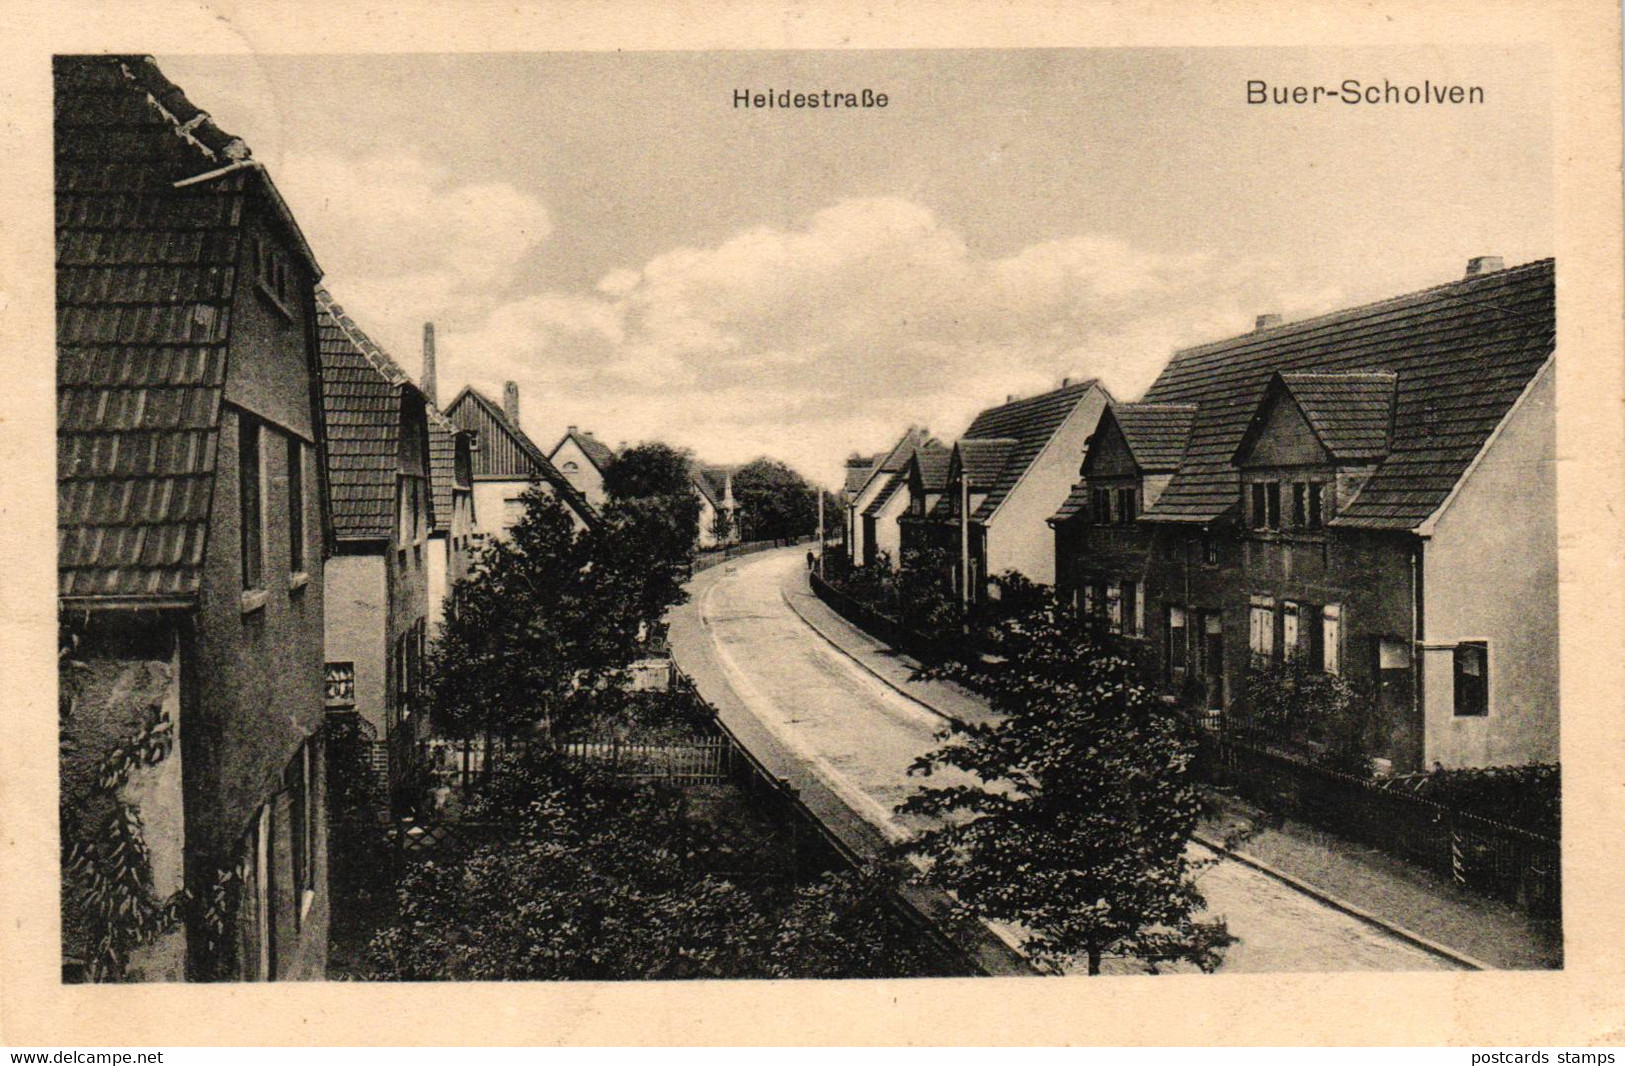 Gelsenkirchen - Scholven, Heidestrasse, 1918 - Geilenkirchen